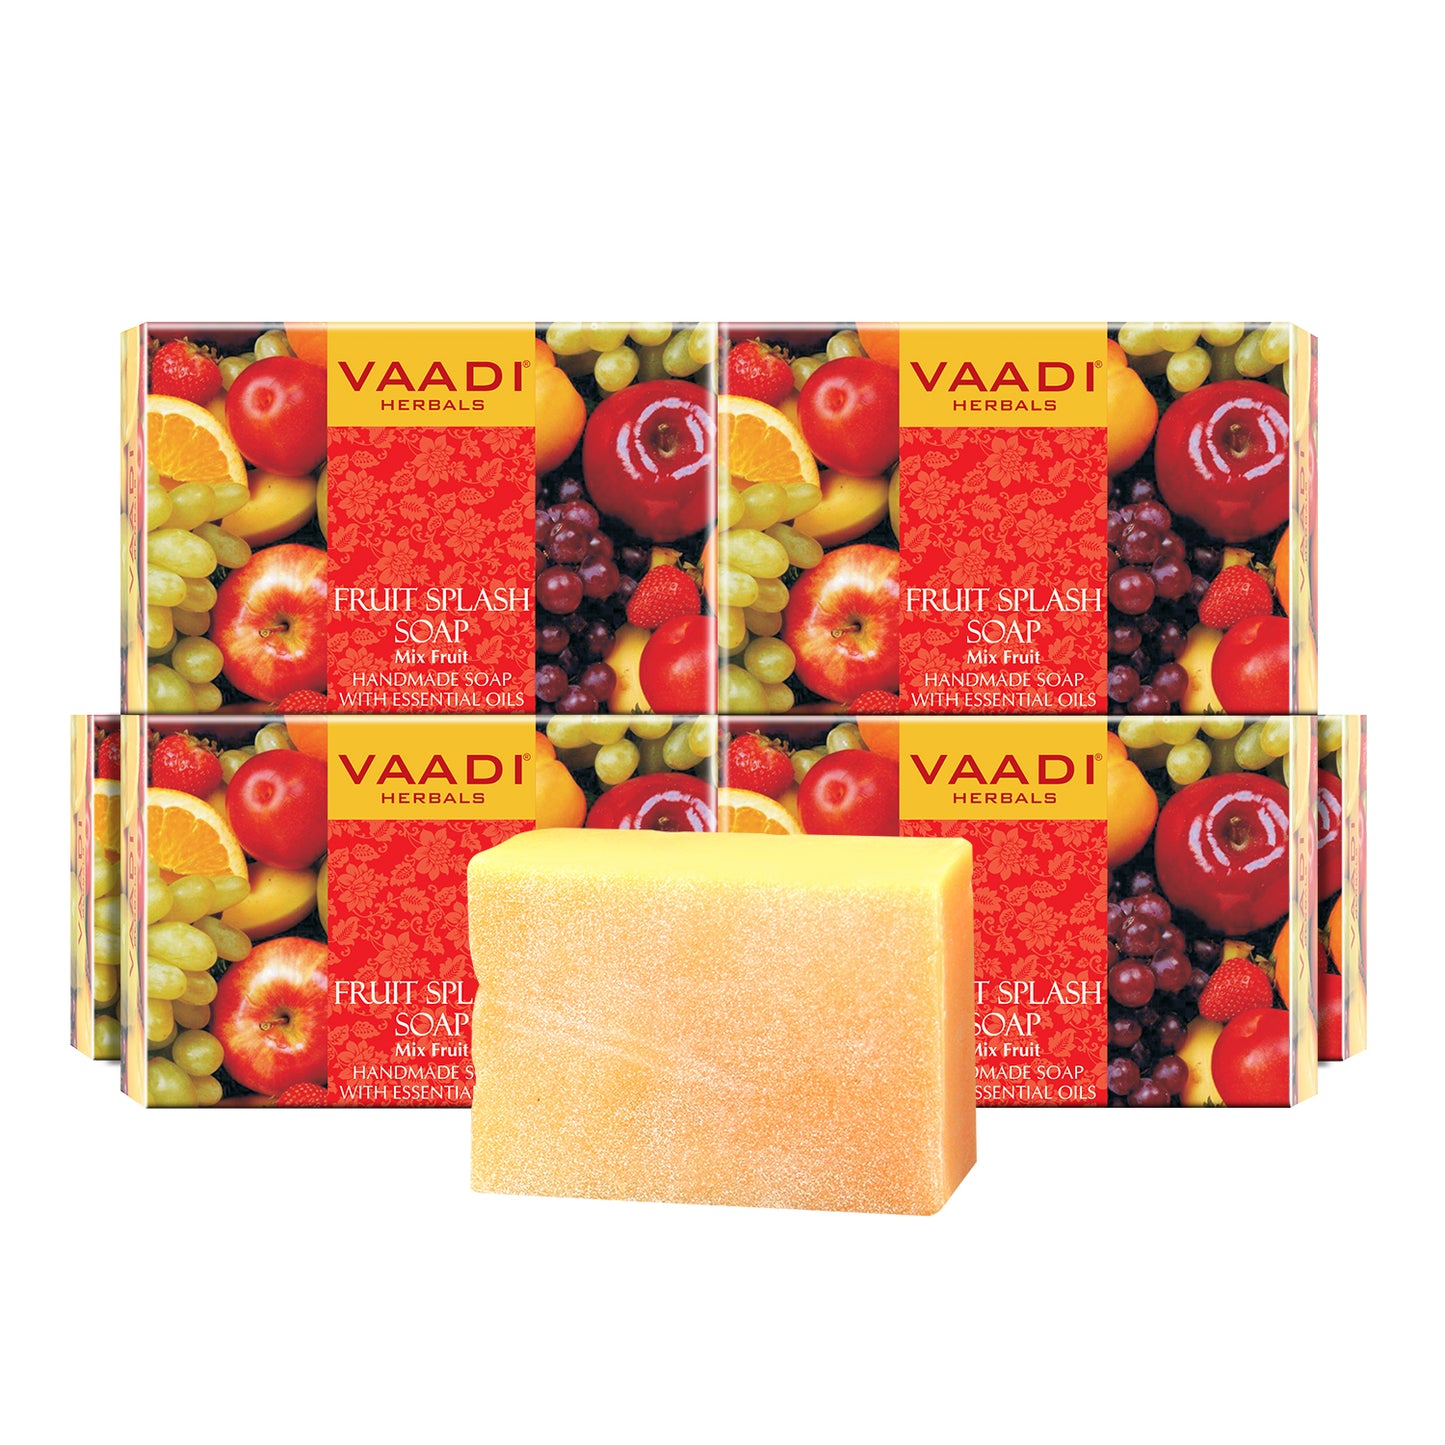 Organic Fruit Splash Soap with Orange, Peach, Lemon & Green Apple - Multivitamin Rich - Keeps Skin Nourished (6 x 75 gms/2.7 oz)